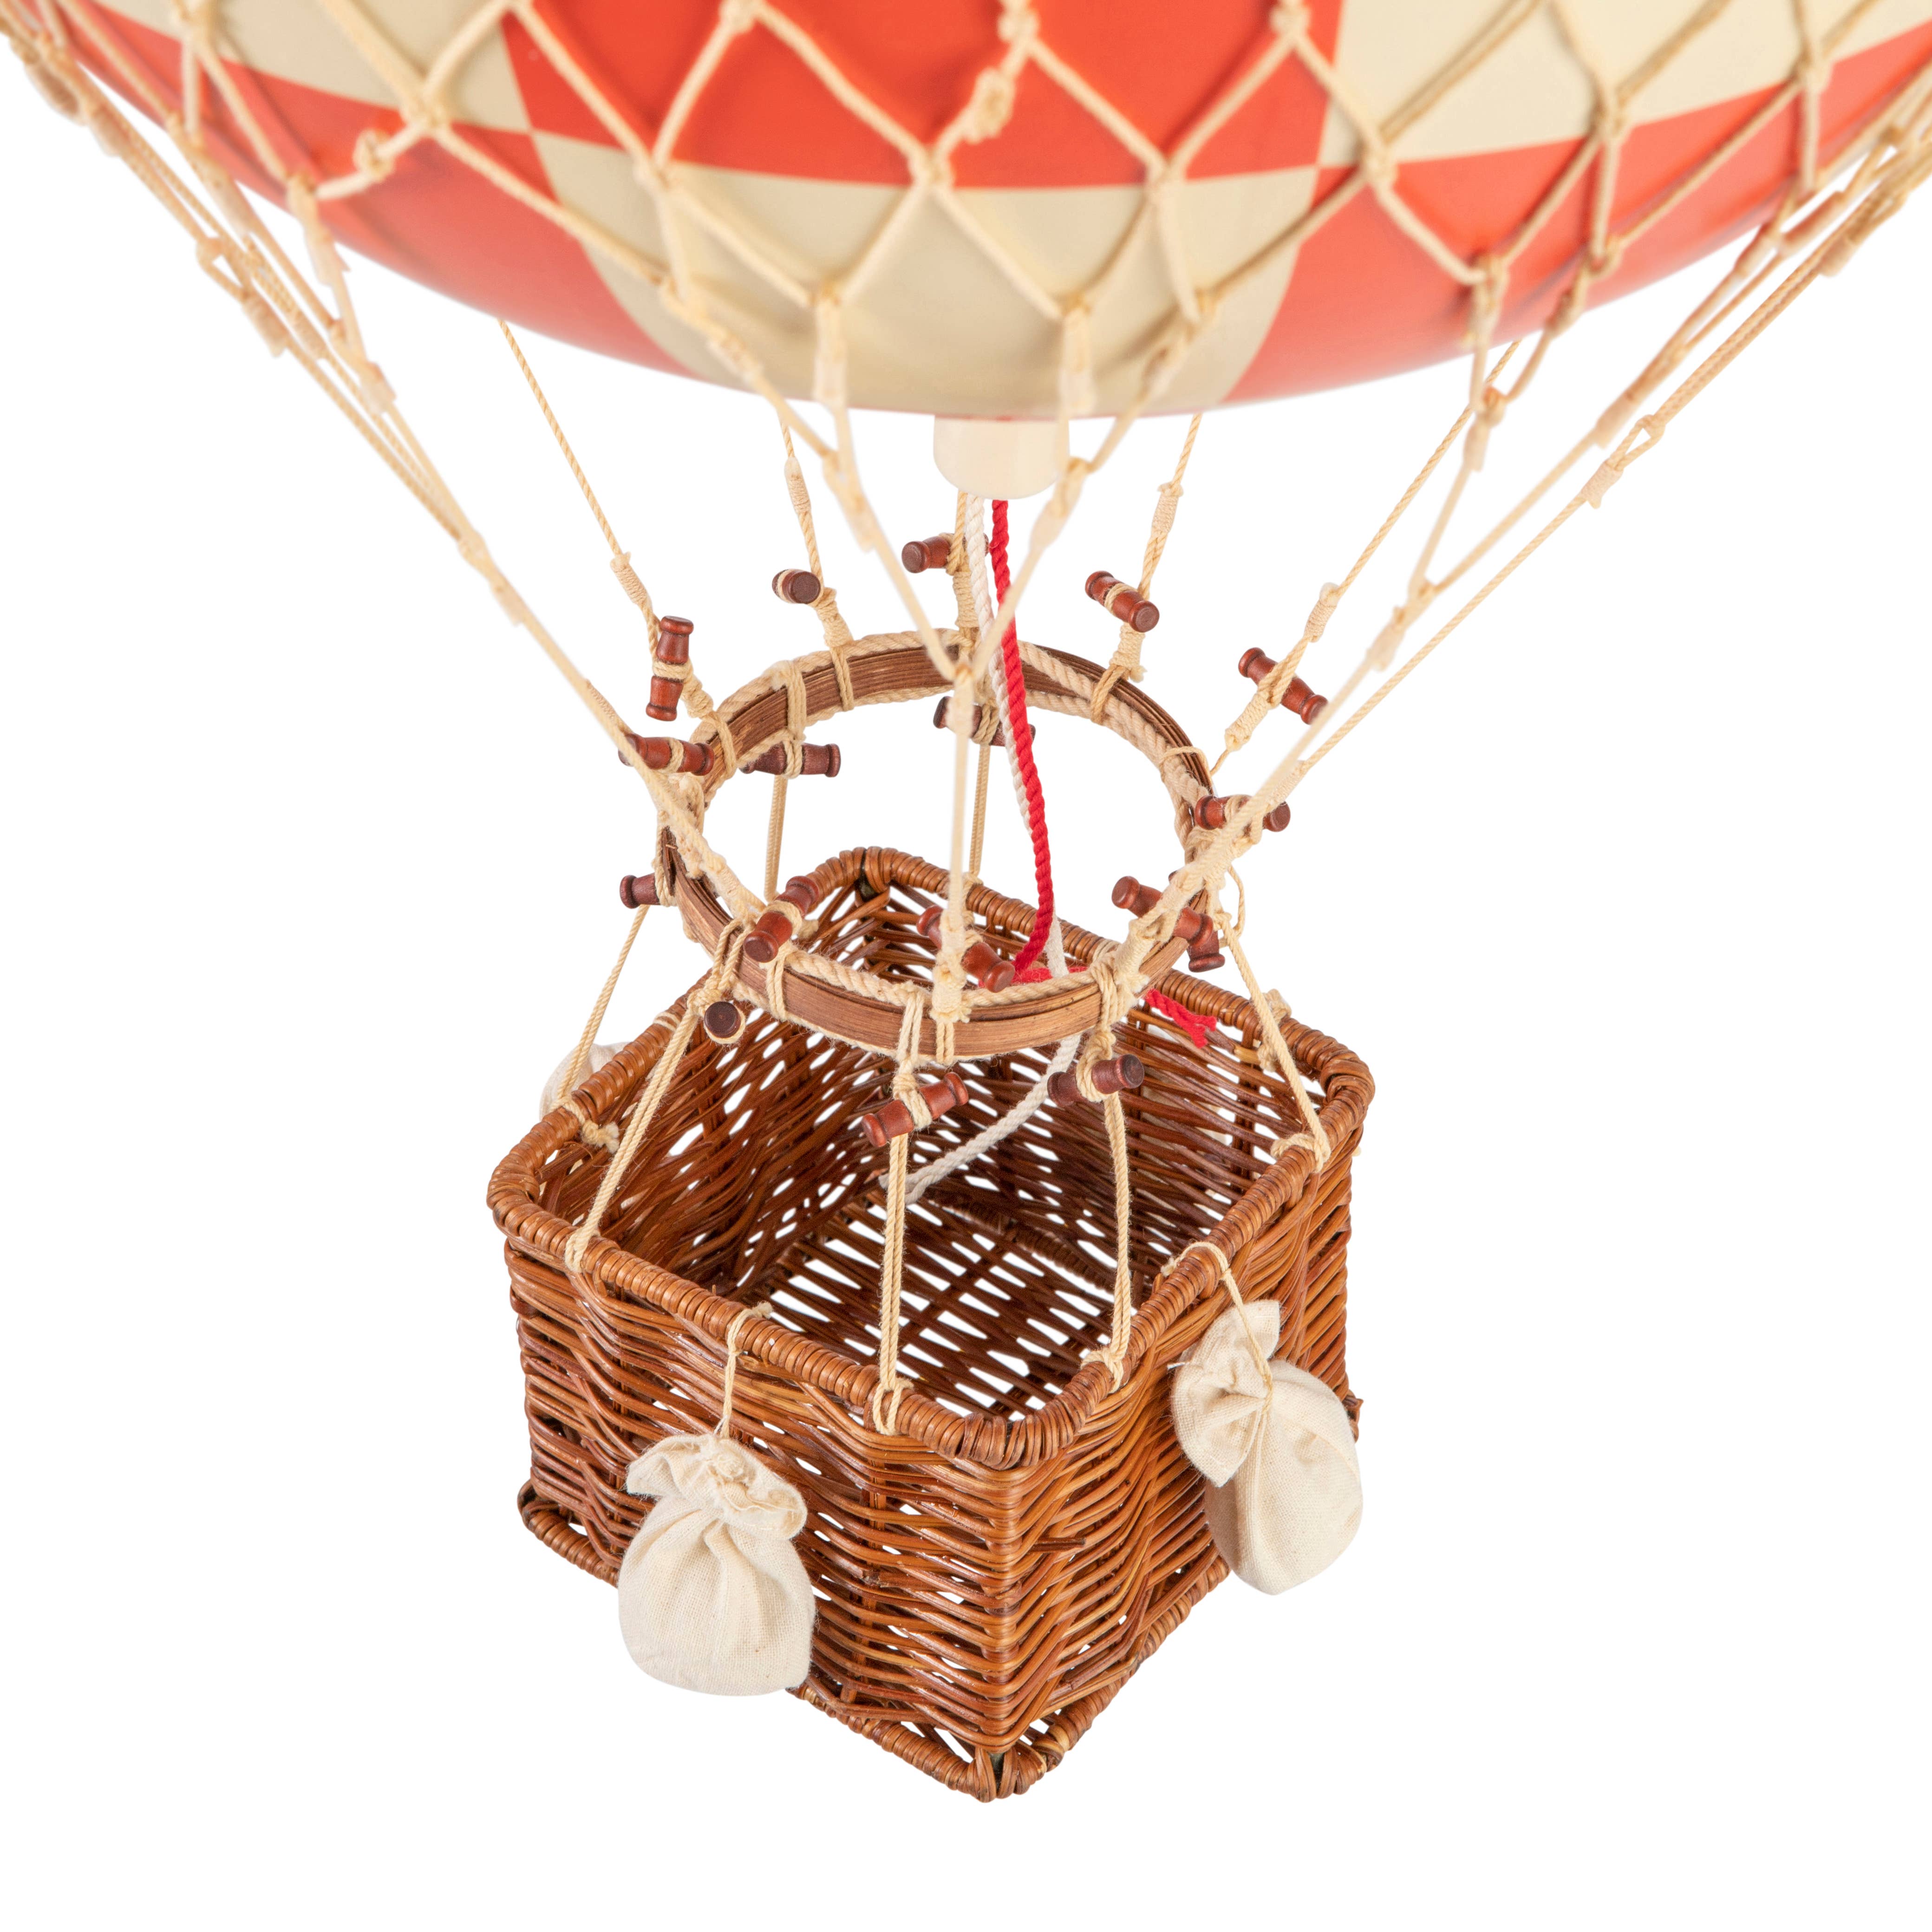 Royal Aero Hot Air Balloon - Large - Red Check by Authentic Models - Harold&Charles